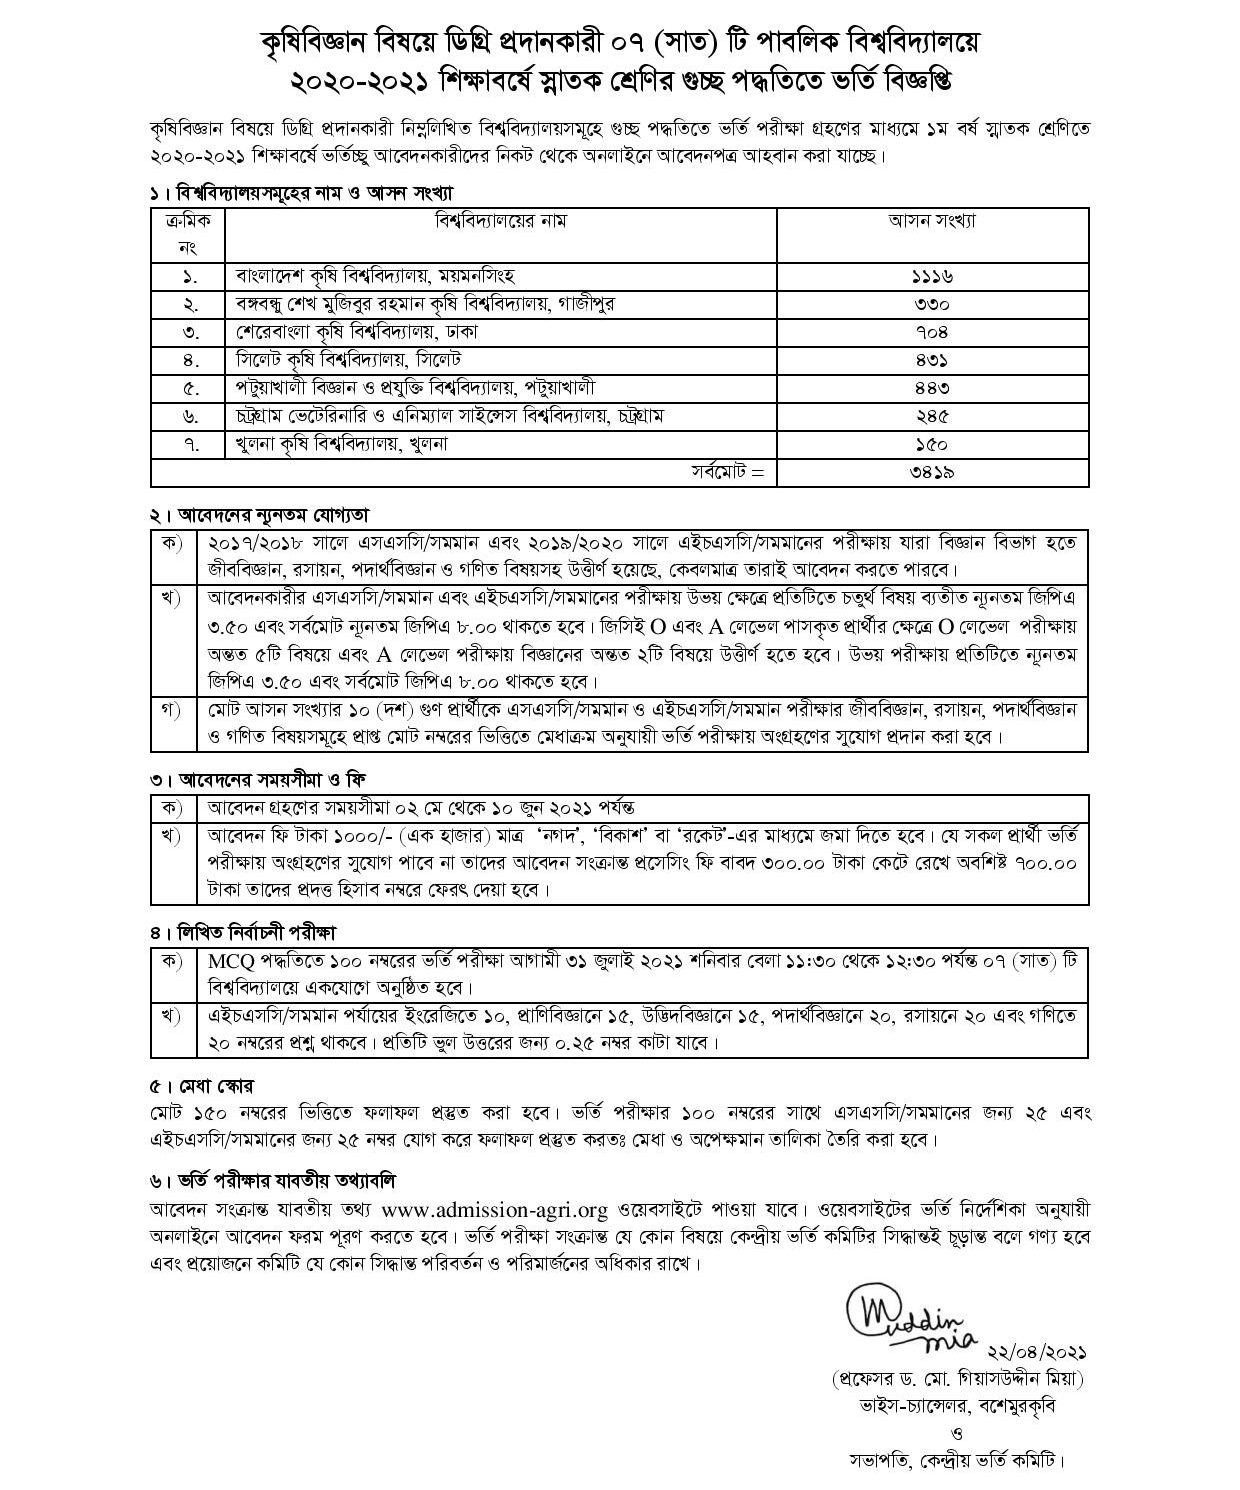 Sher-e-Bangla Agricultural University Admission Circular 2021